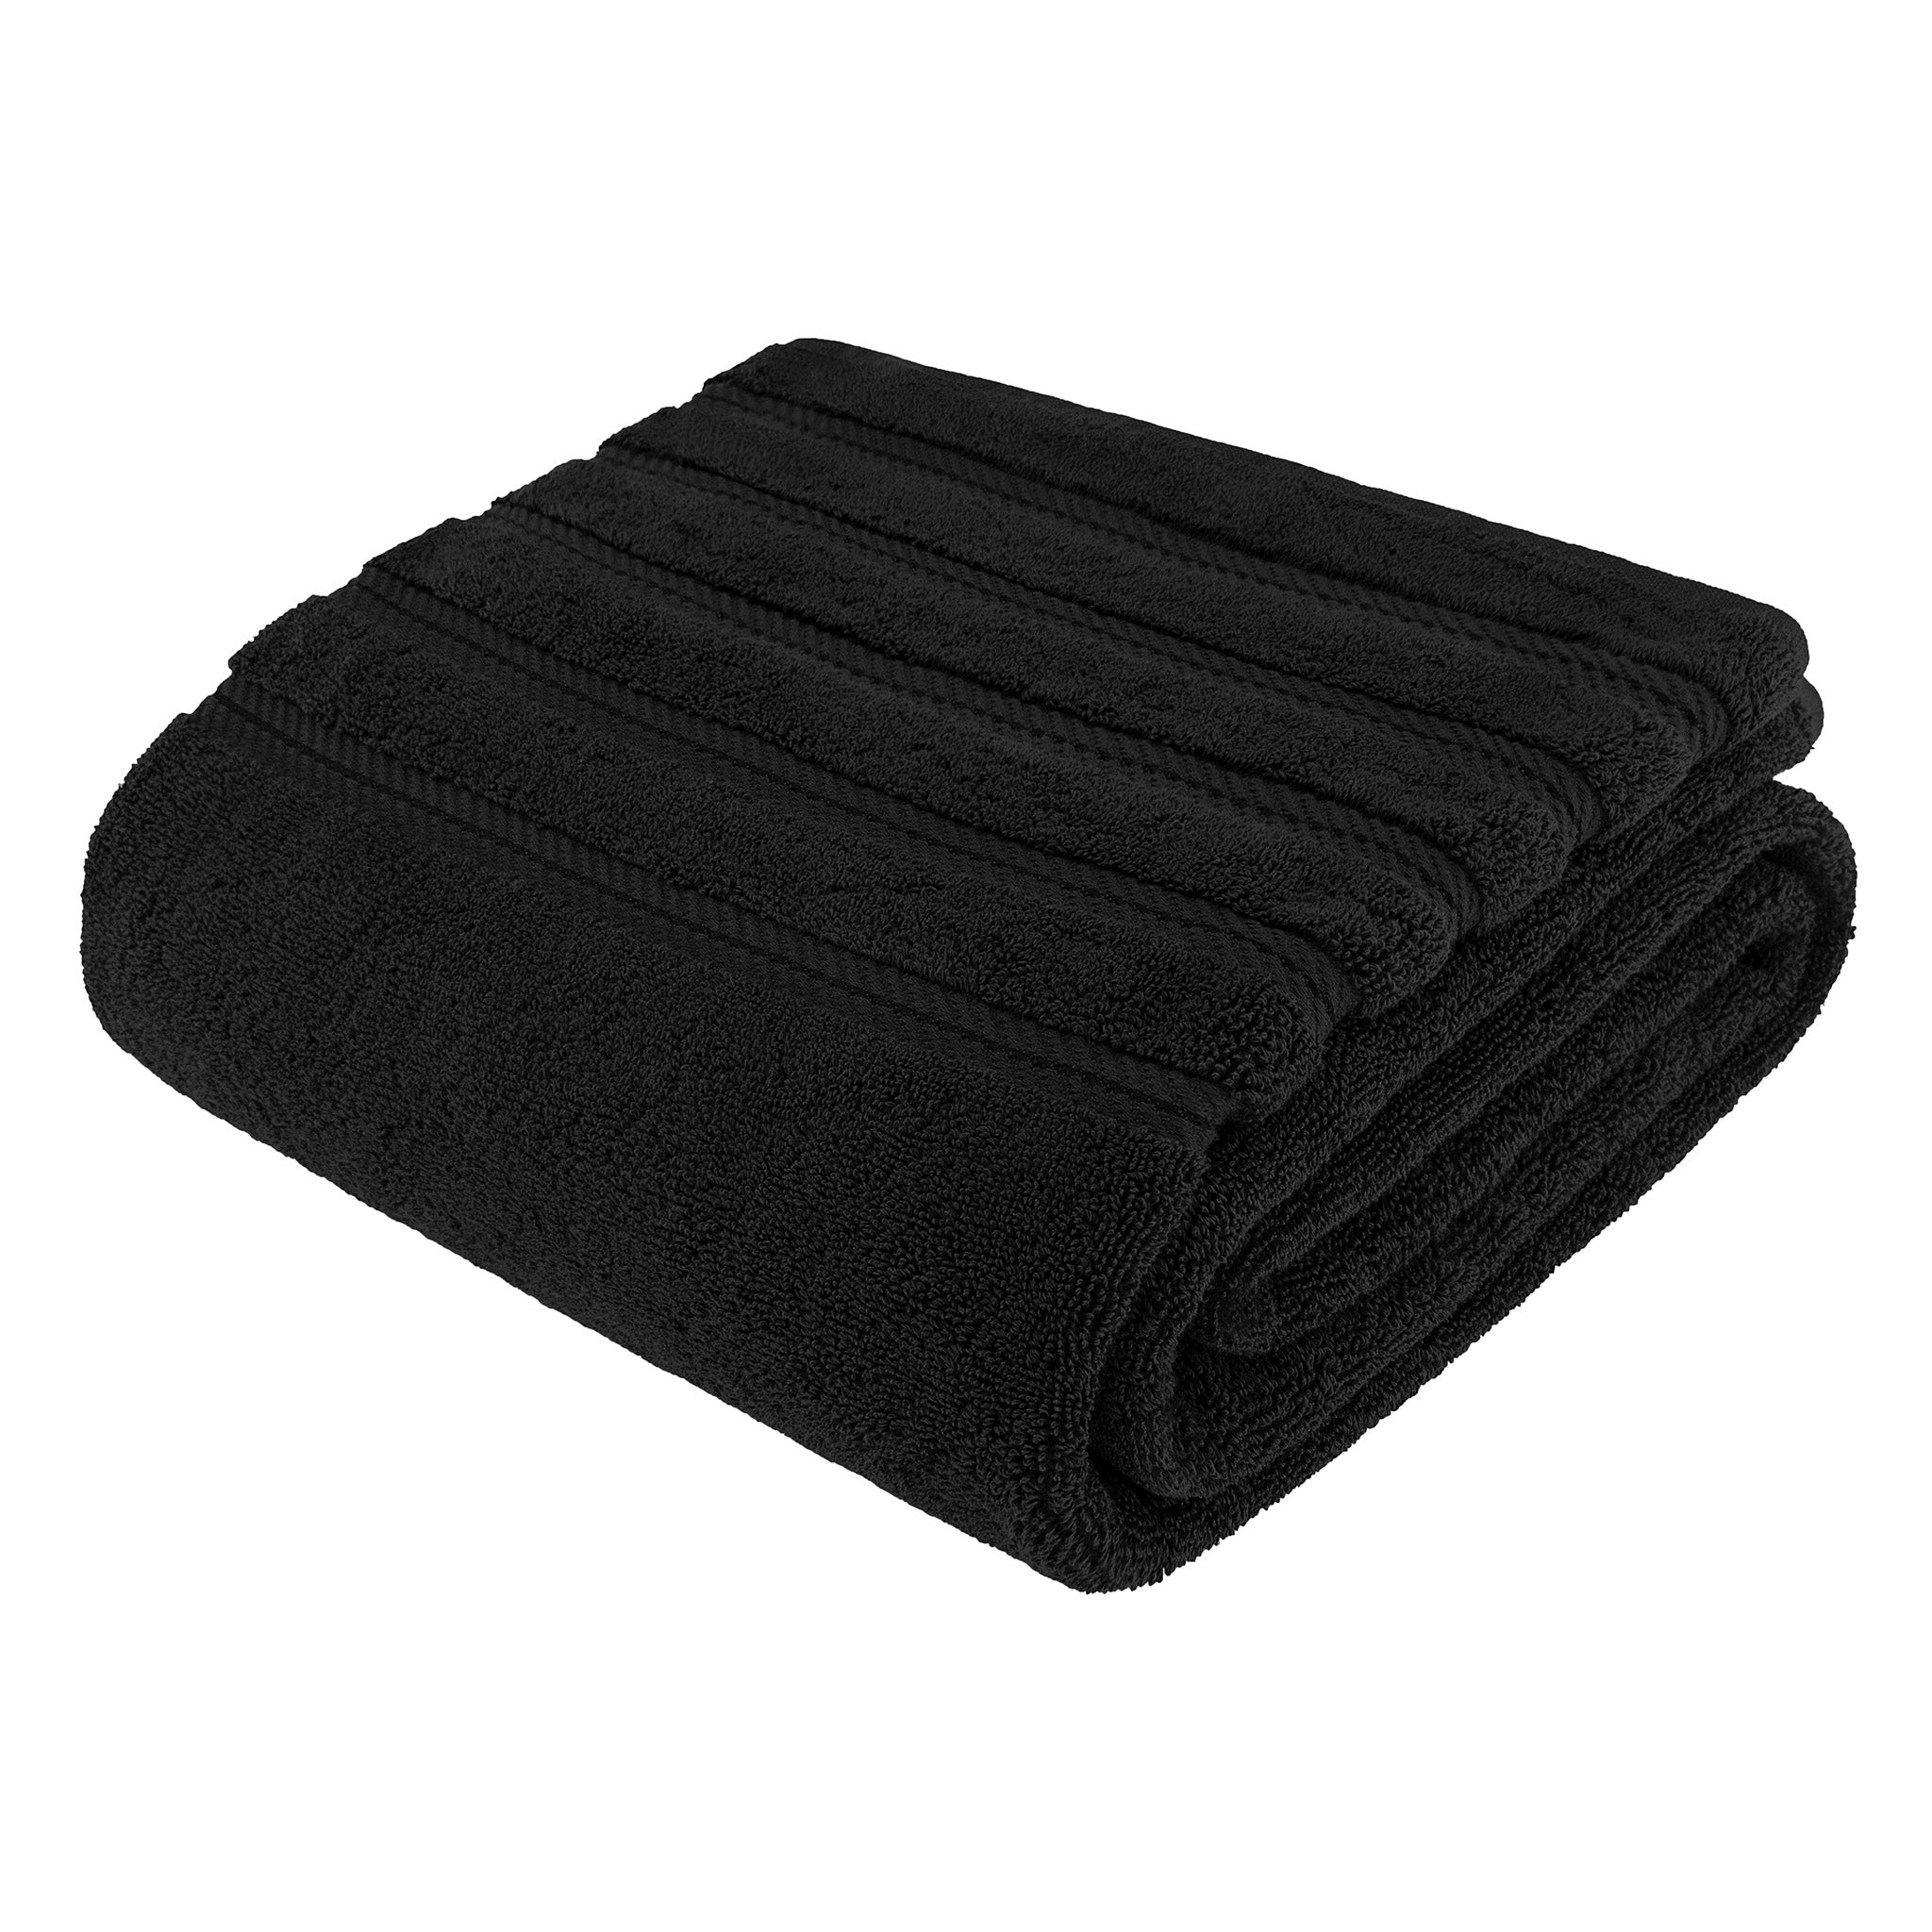 Classic Turkish Towels Luxurious Jumbo Bath Sheet Towel Black